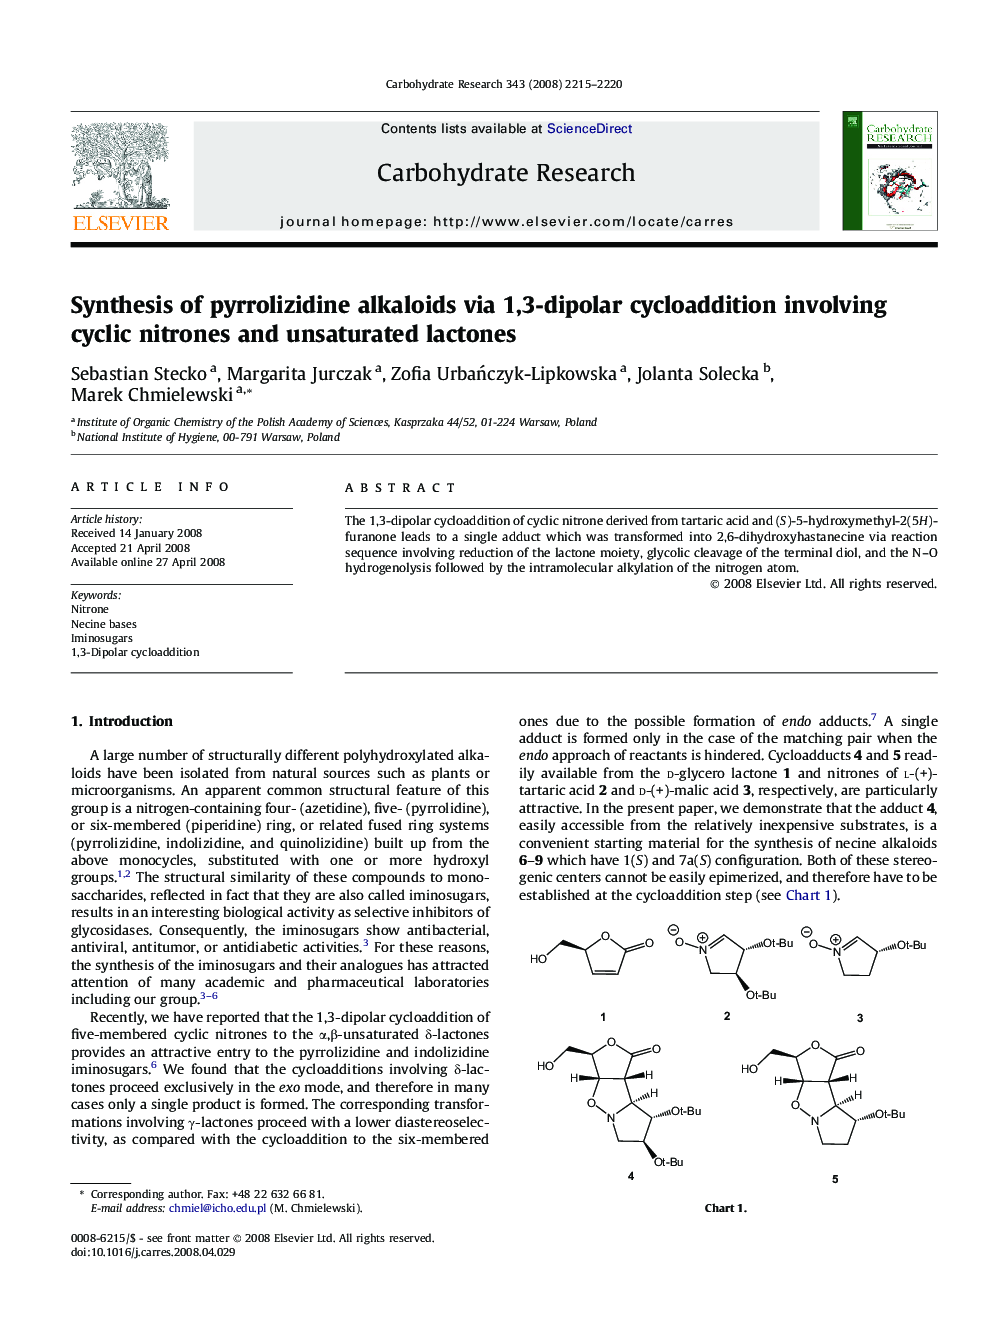 Synthesis of pyrrolizidine alkaloids via 1,3-dipolar cycloaddition involving cyclic nitrones and unsaturated lactones